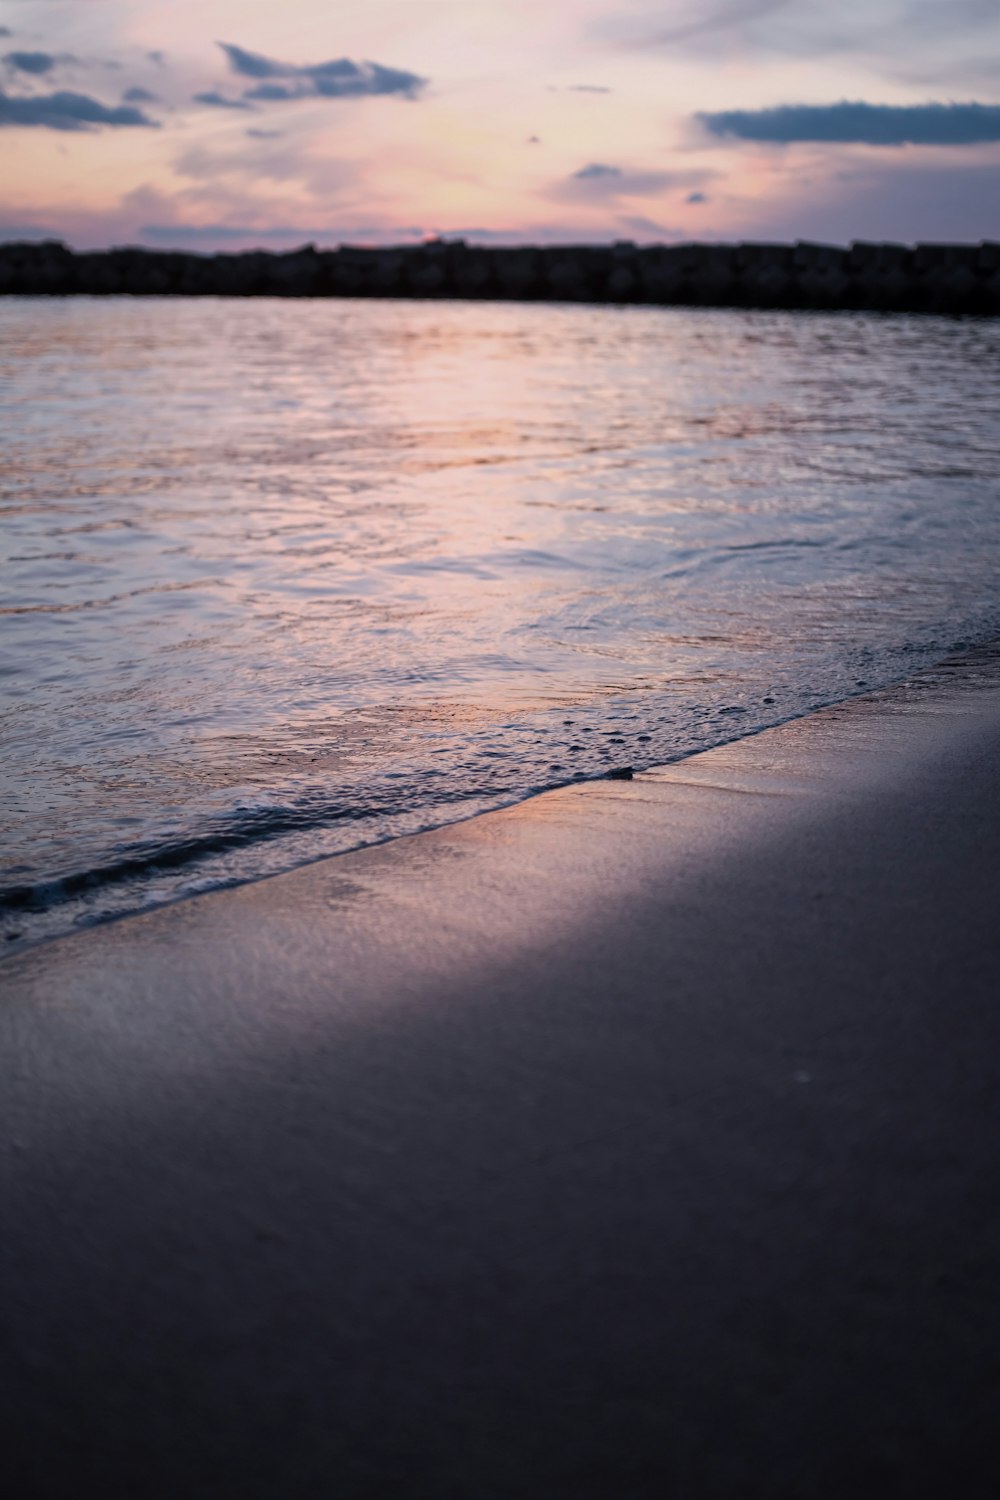 seashore during sunset